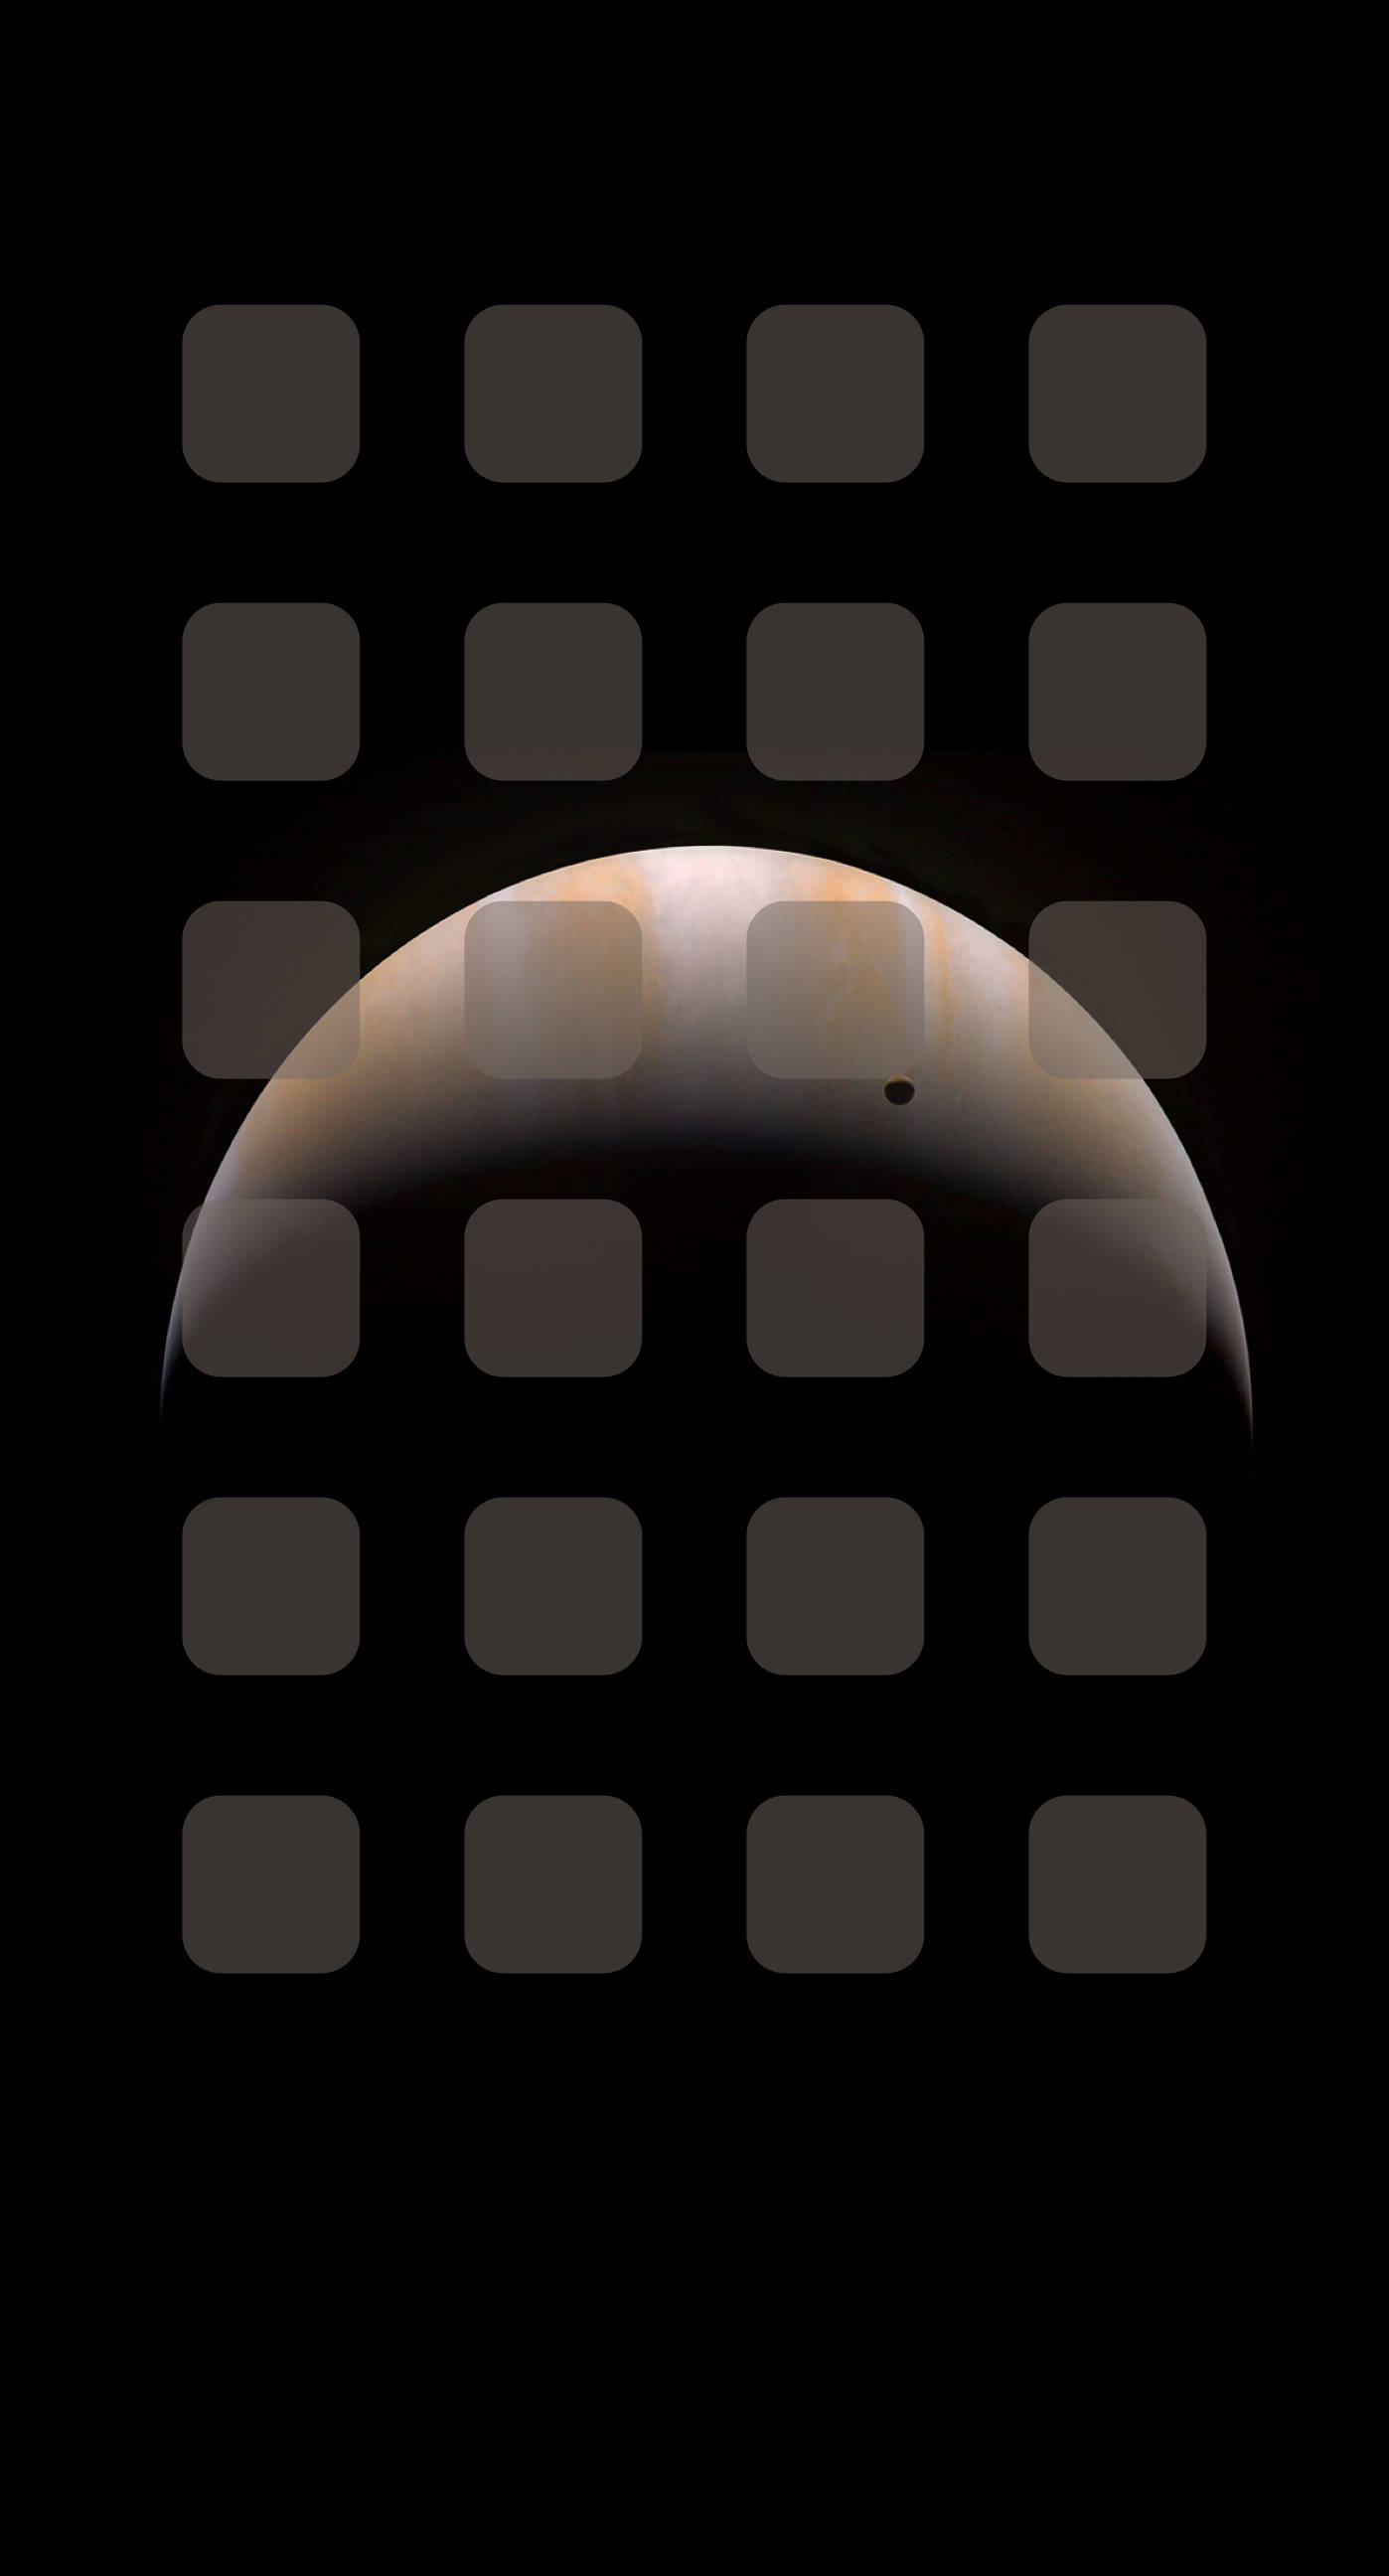 Space planet brown shelf. wallpaper.sc iPhone8Plus